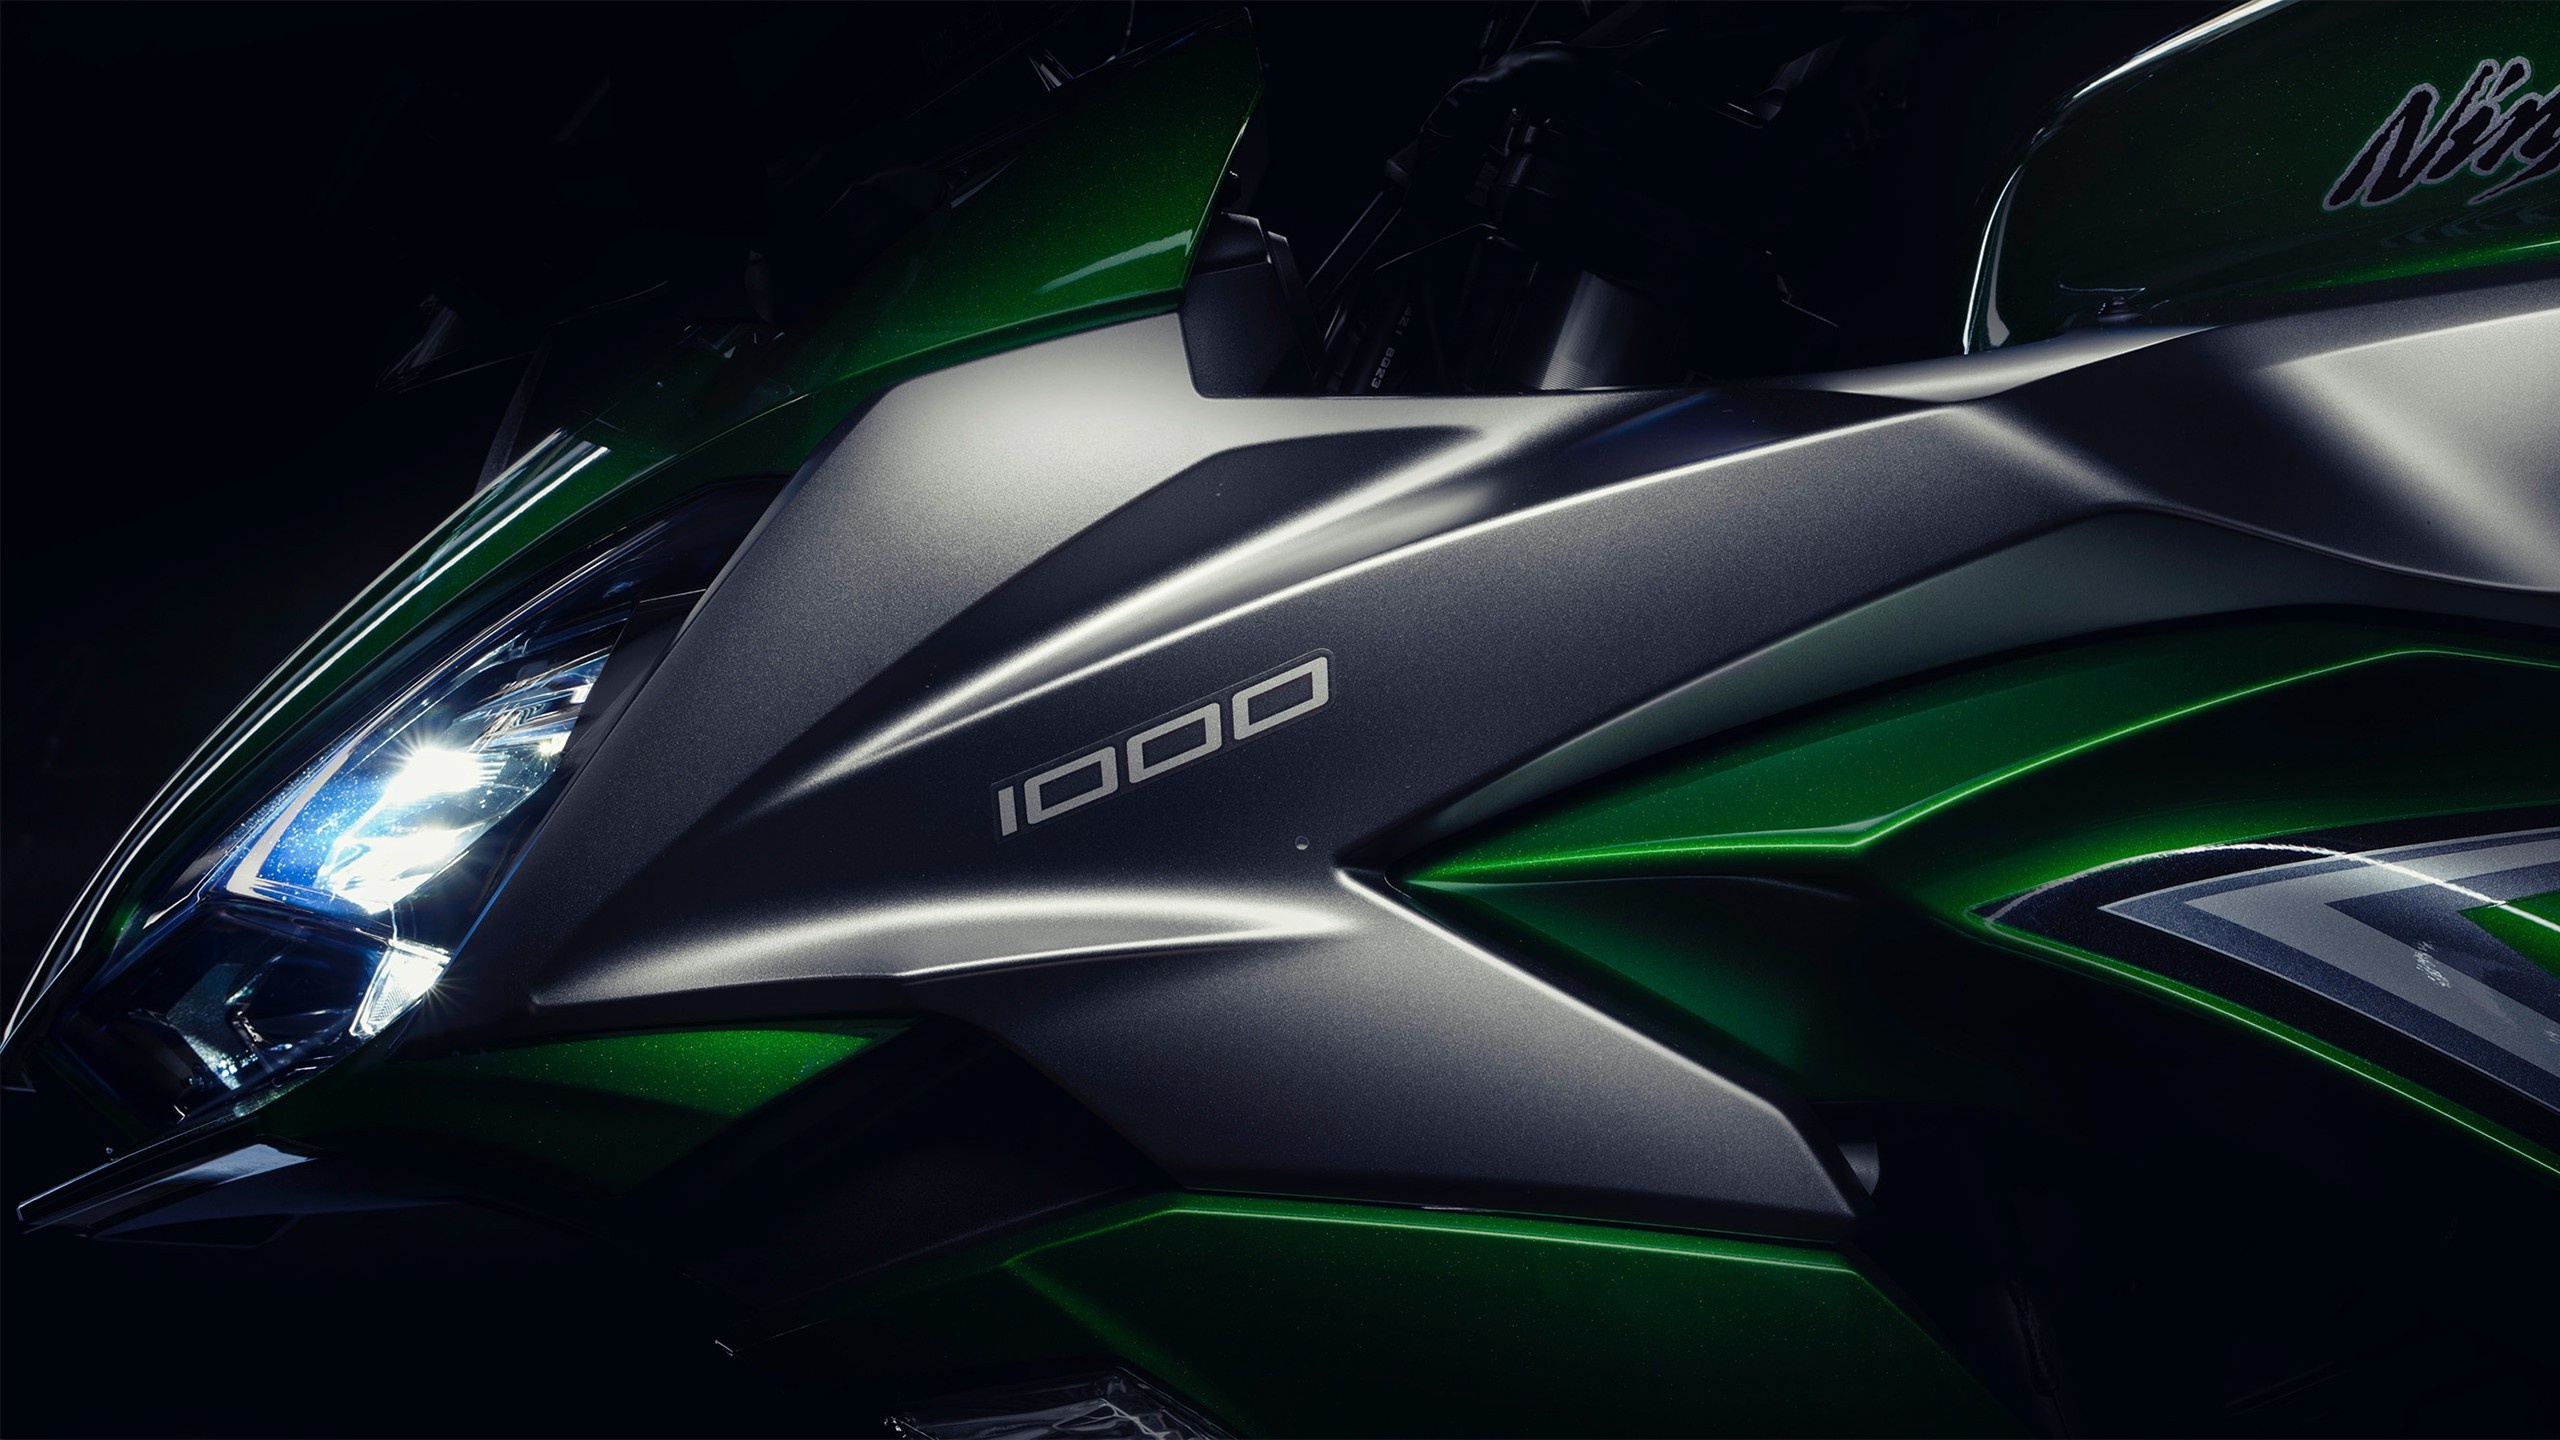 Kawasaki Ninja 1000, Closeup view, Nighttime ambiance, Dark background, 2560x1440 HD Desktop